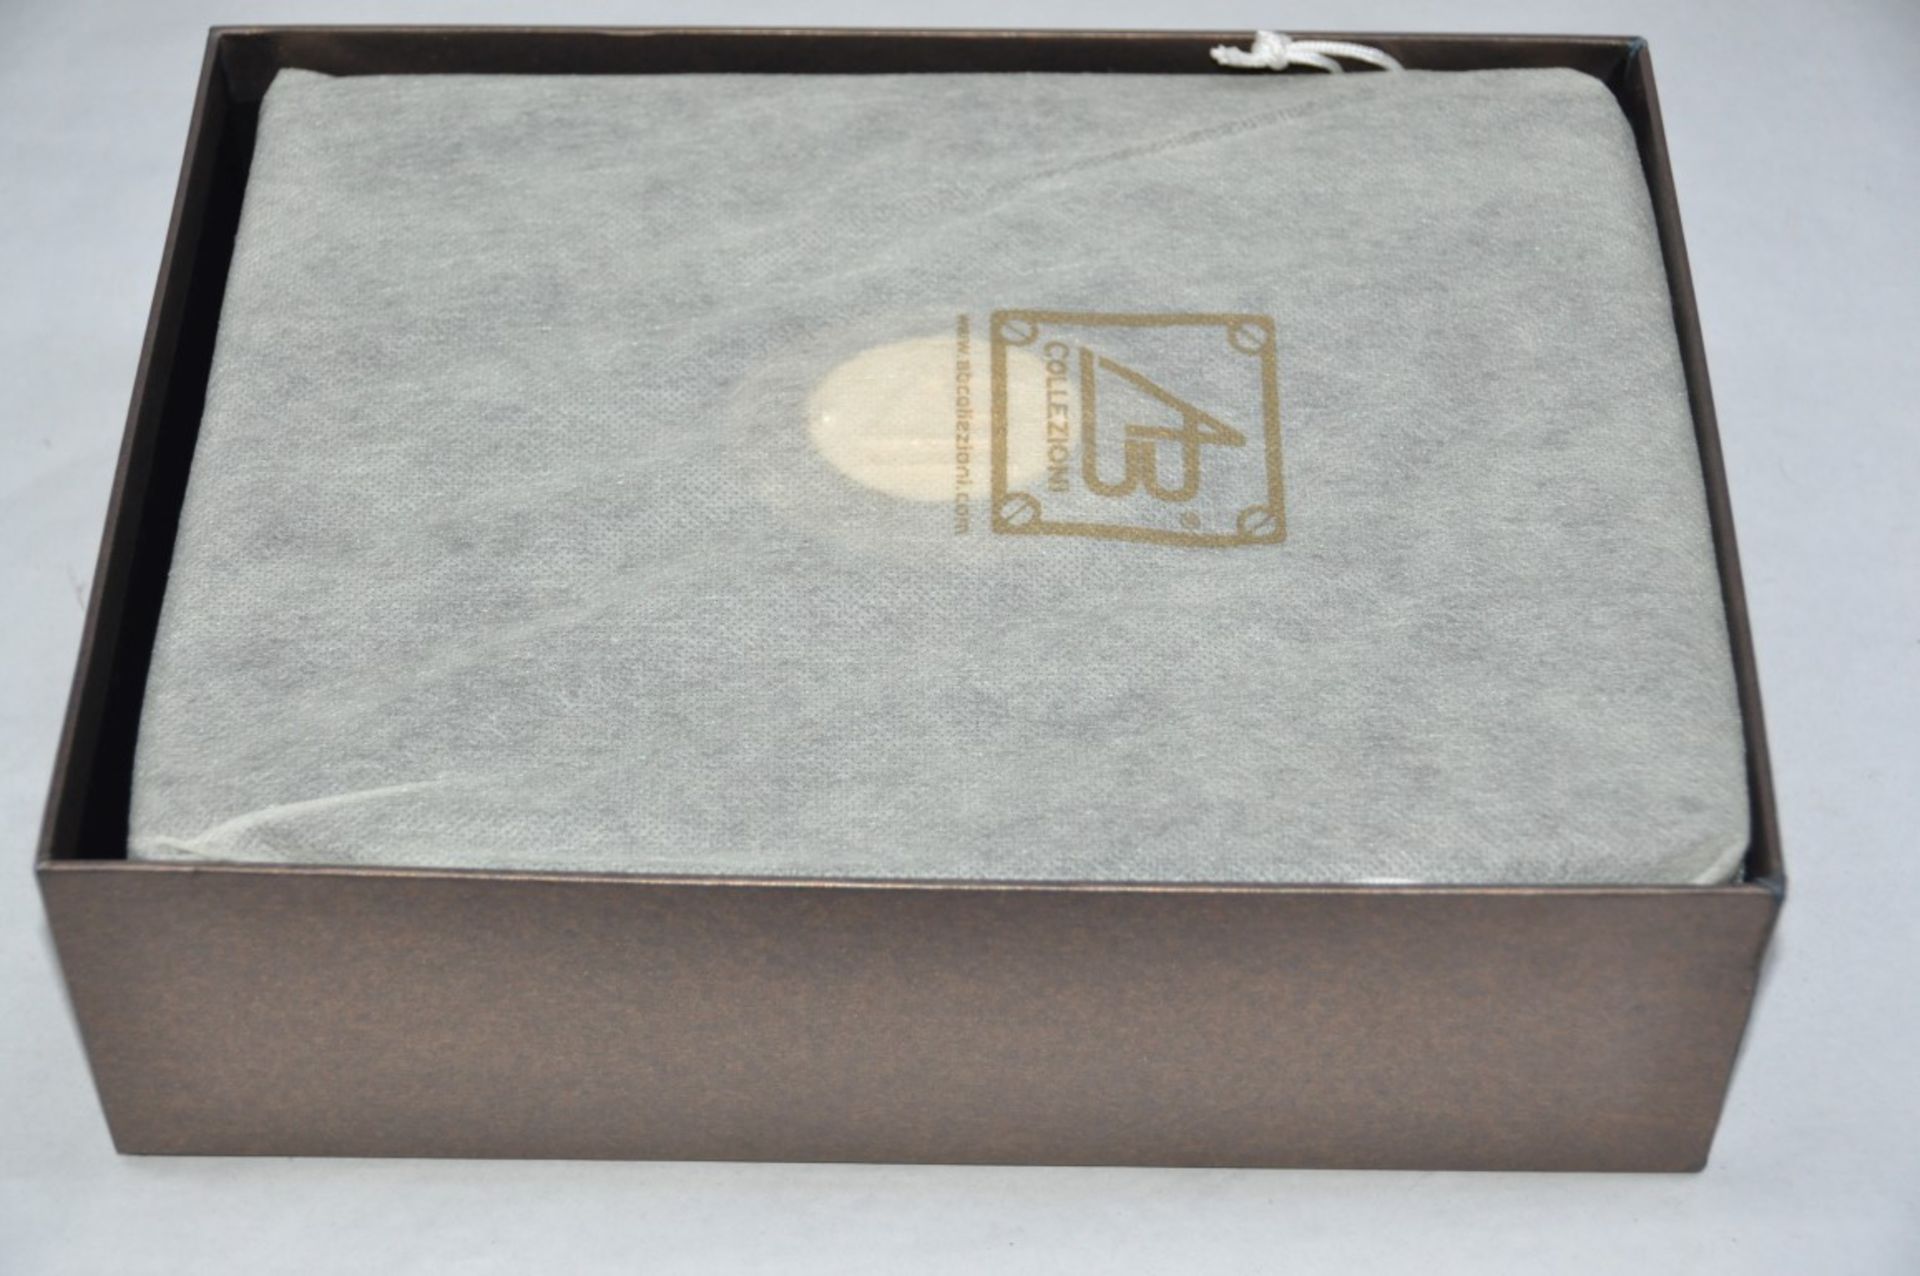 1 x "AB Collezioni" Italian Genuine Leather-Bound Luxury POKER SET (34048) - Ref LT003 - Features - Image 5 of 8